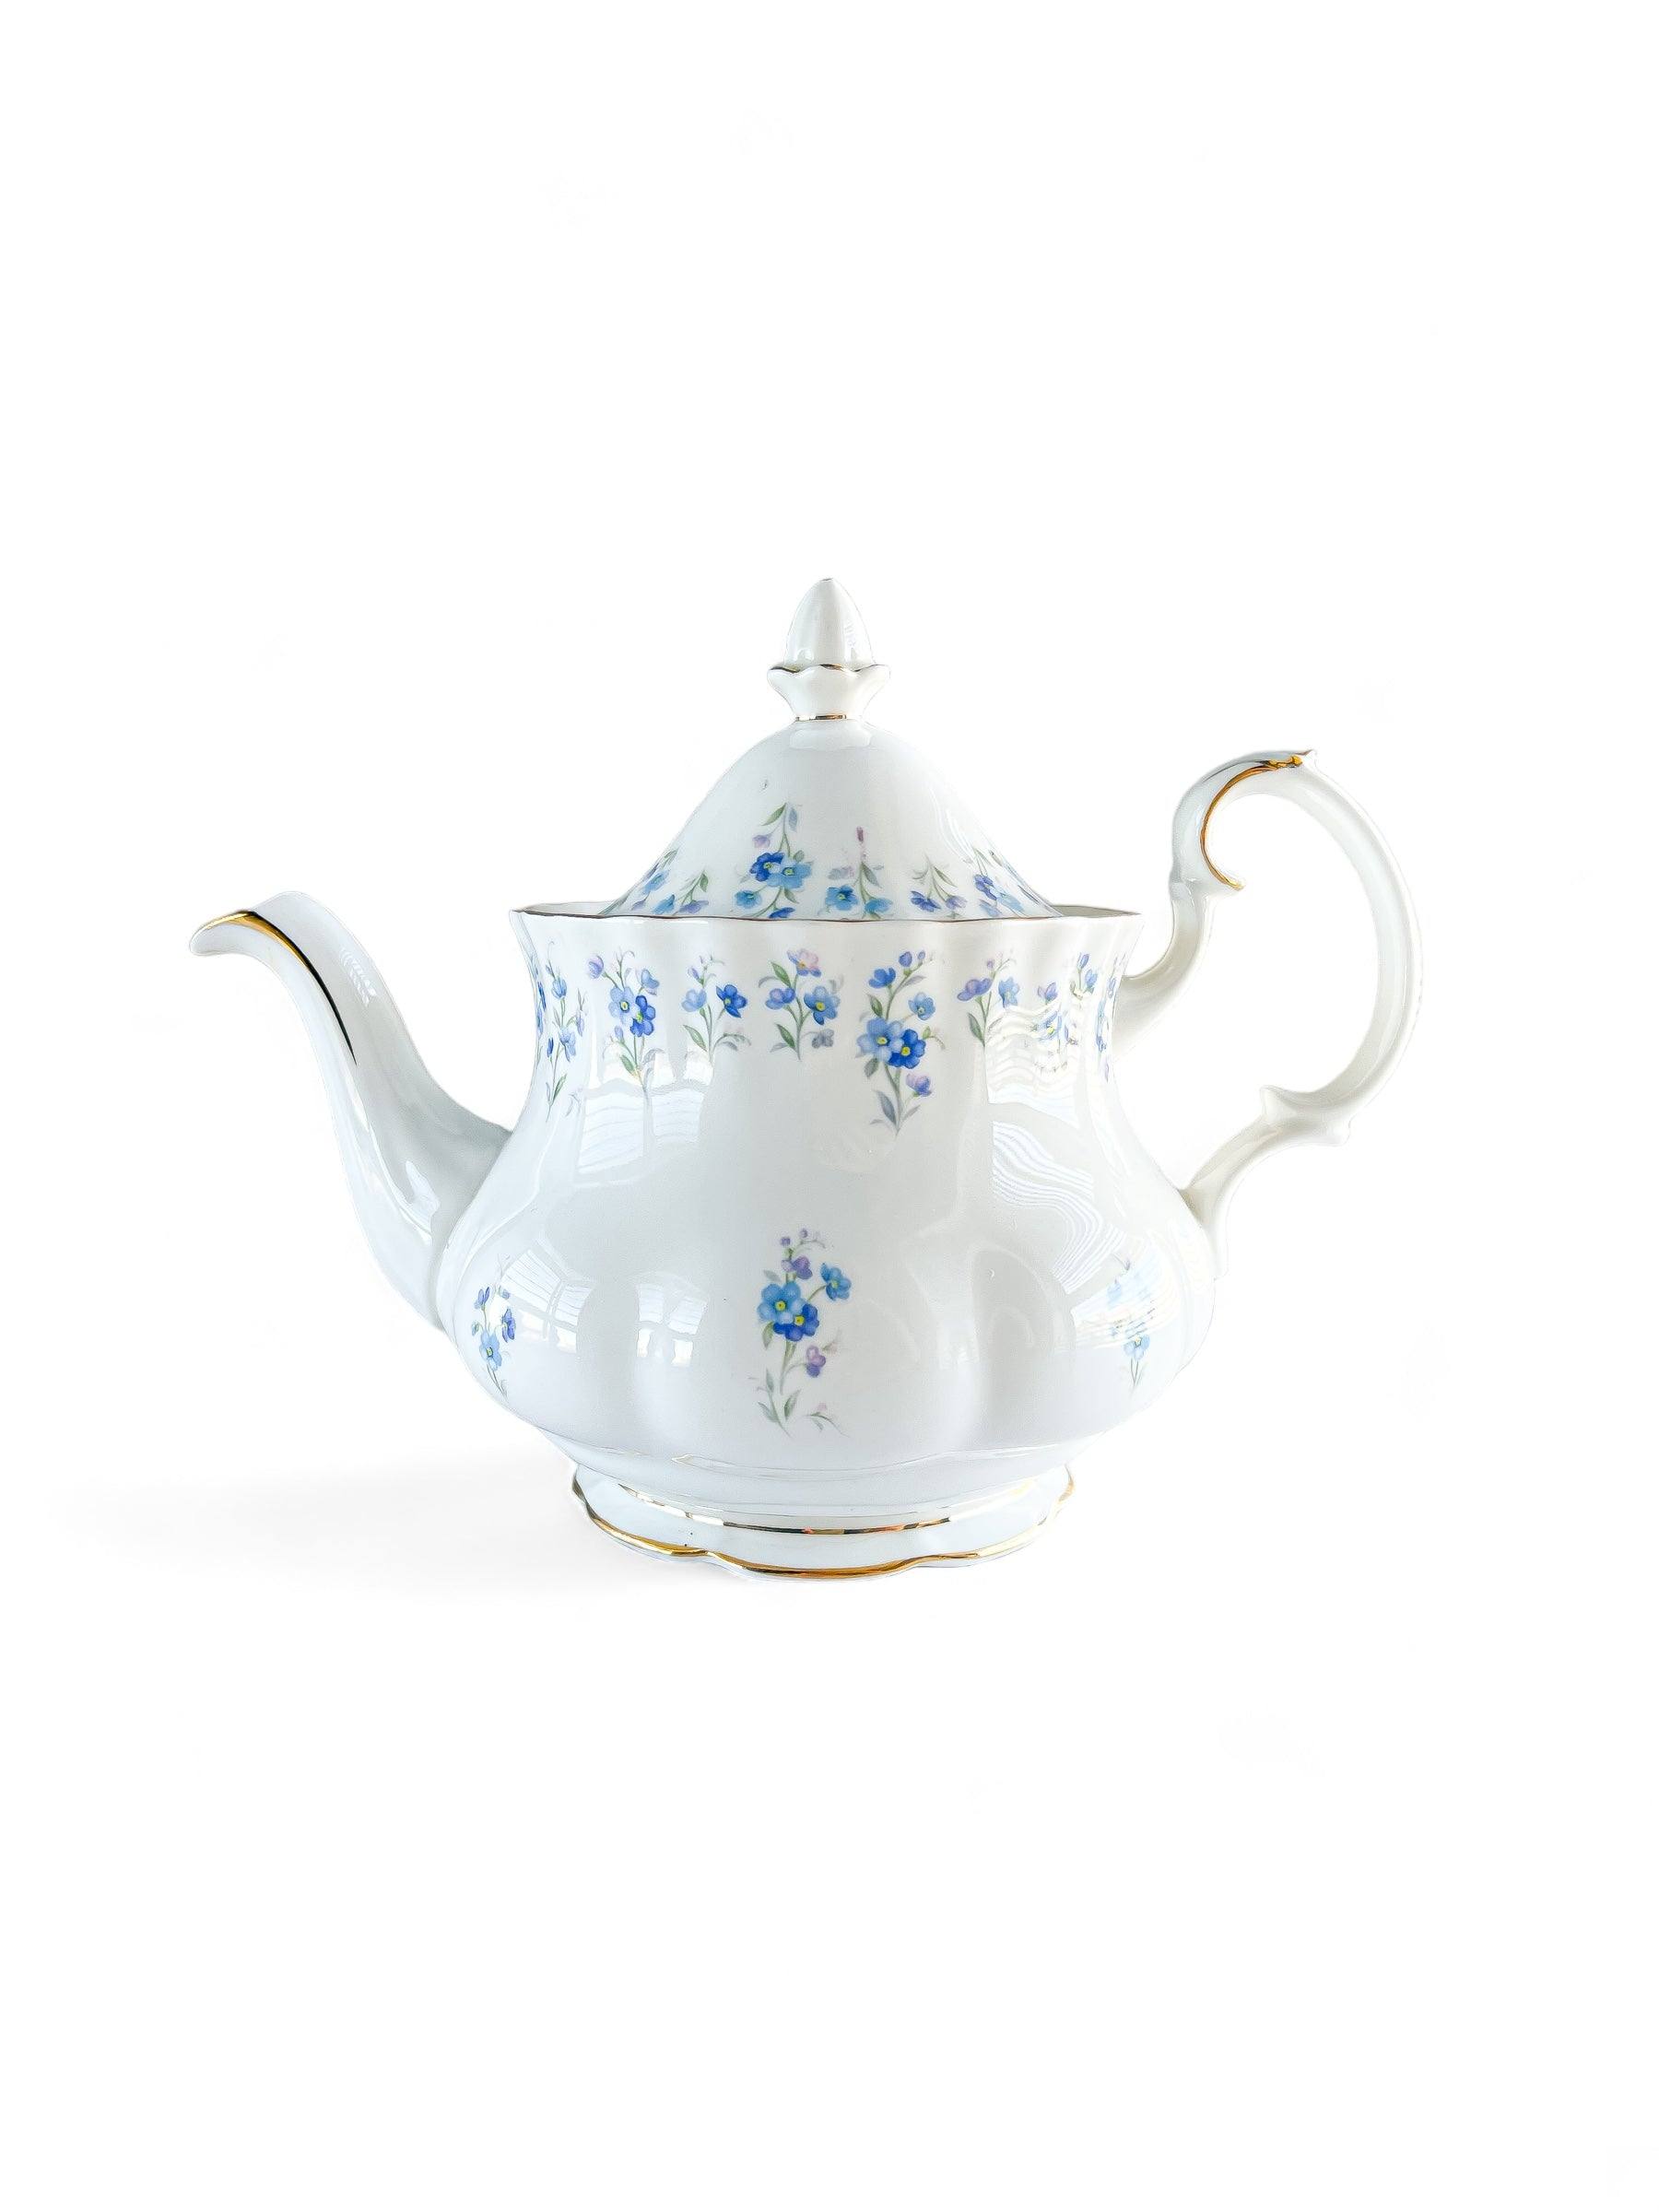 Royal Albert Bachelor Tea Set - 'Memory Lane' Collection - SOSC Home